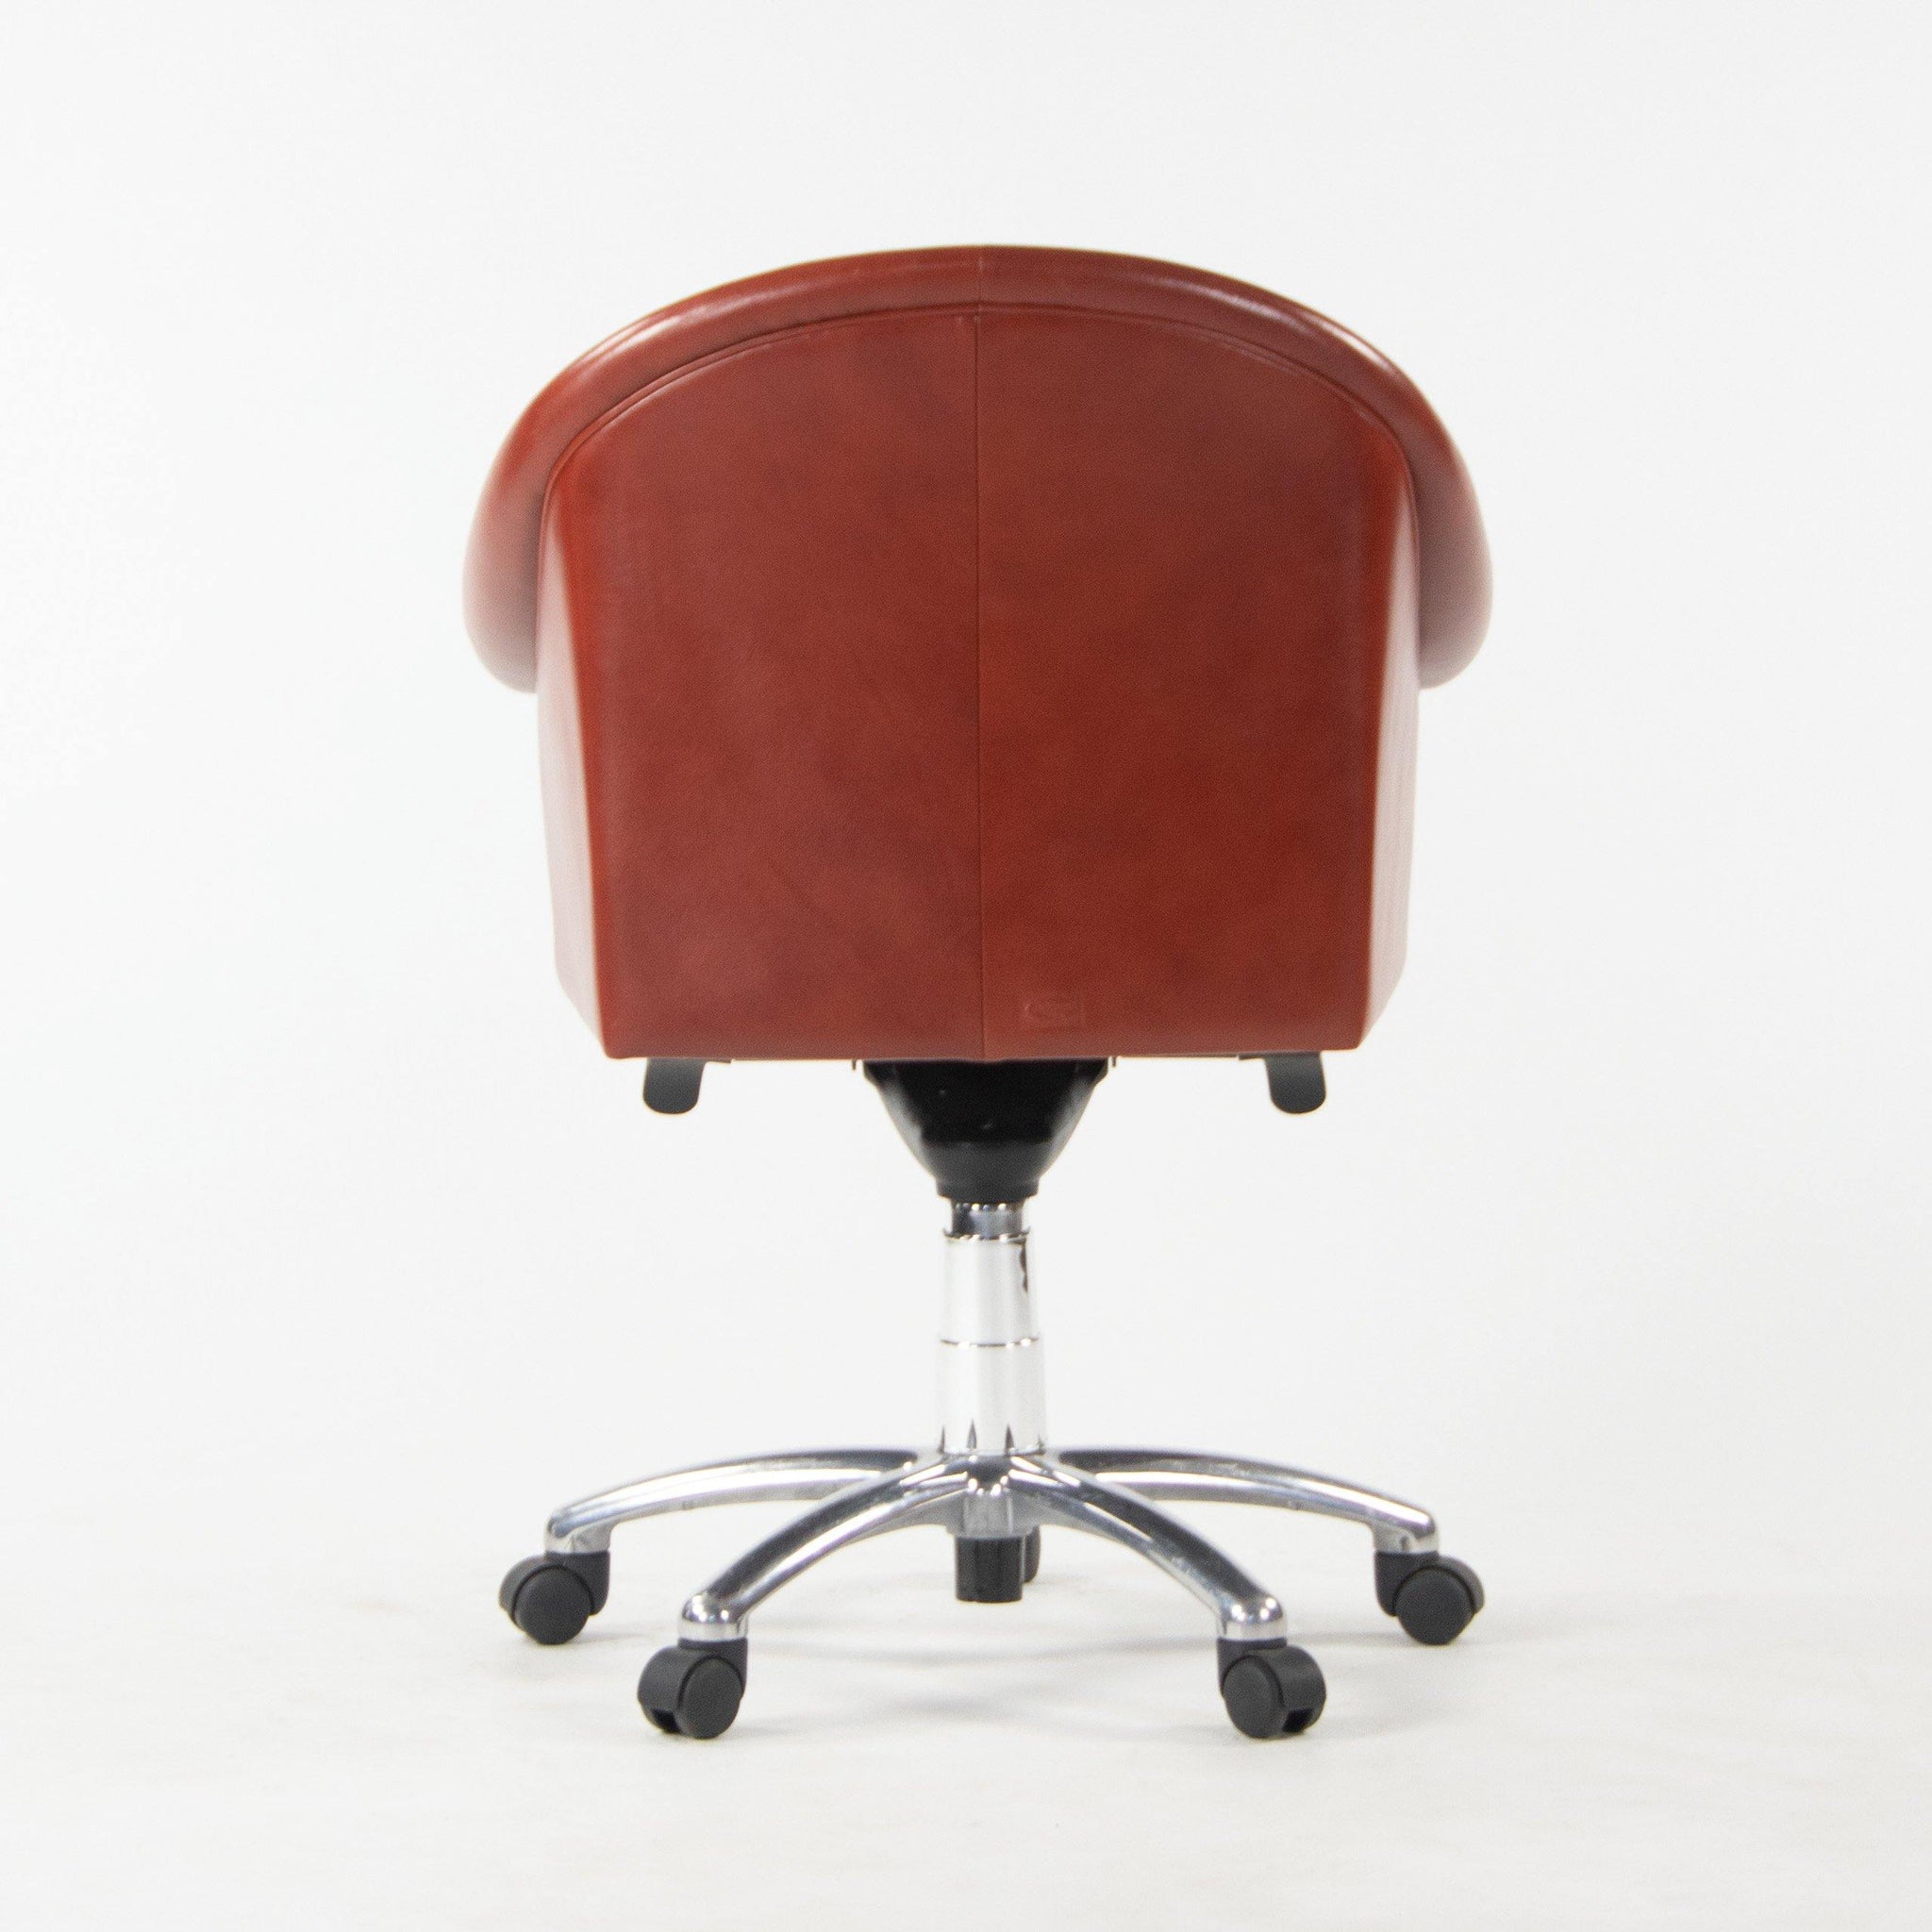 Poltrona Frau Red Leather Luca Scacchetti Sinan Office Desk Chair Multiples Available - Rarify Inc.